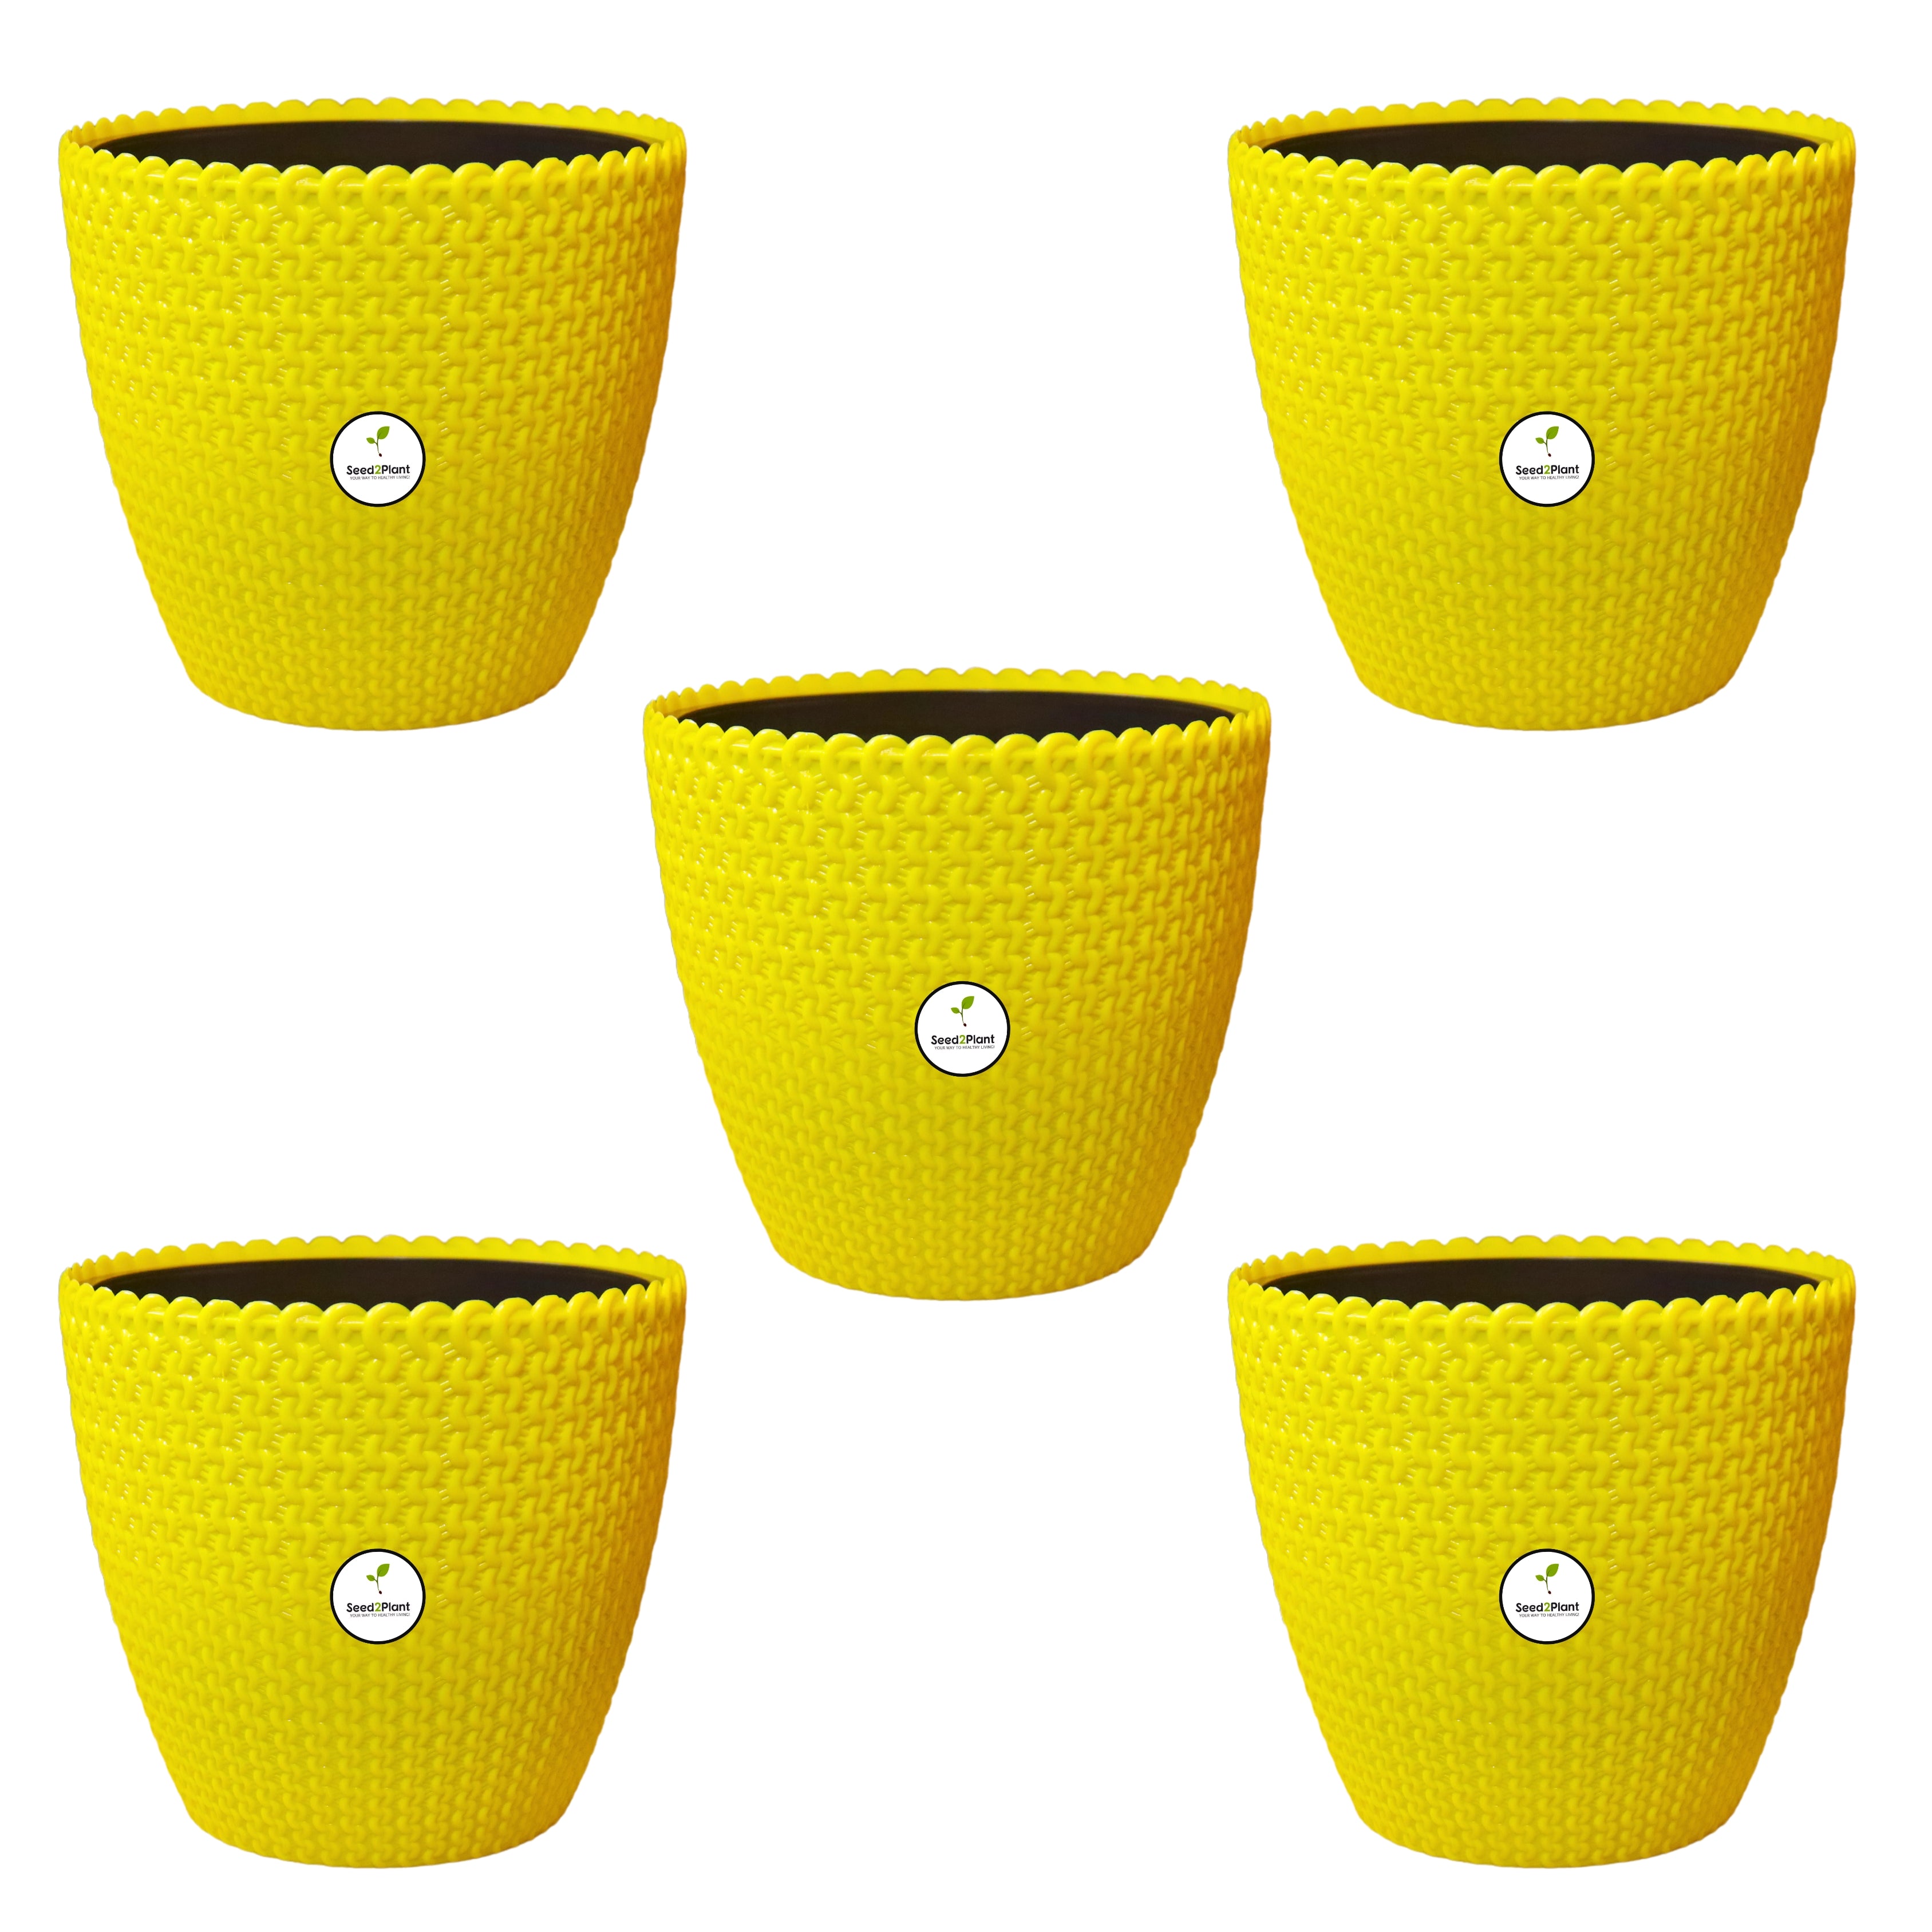 Flora Indoor Plastic Pot (with Inner Pot) - Yellow Colour